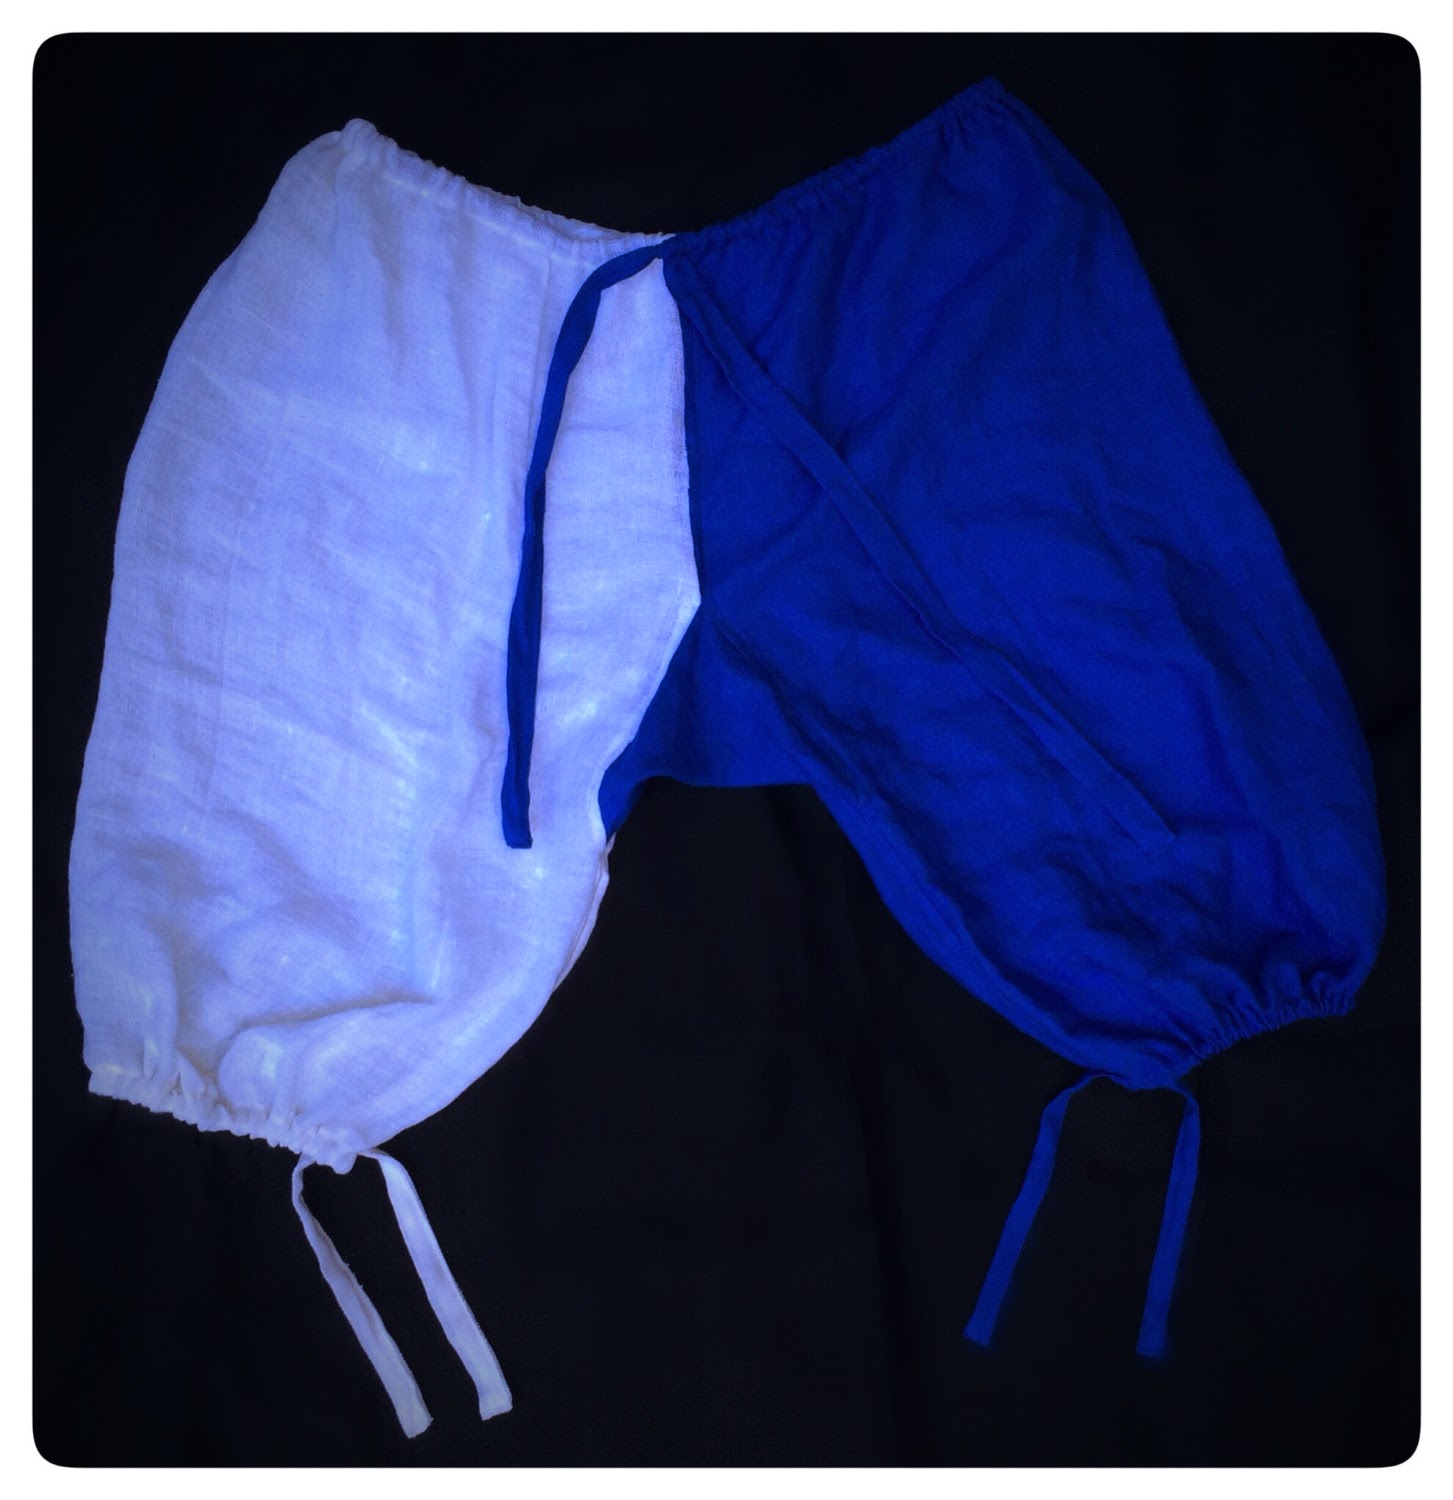 Nicole, Bog shorts in Optic White and Strong Blue.

https://www.etsy.com/listing/220909400/custom-linen-bo...